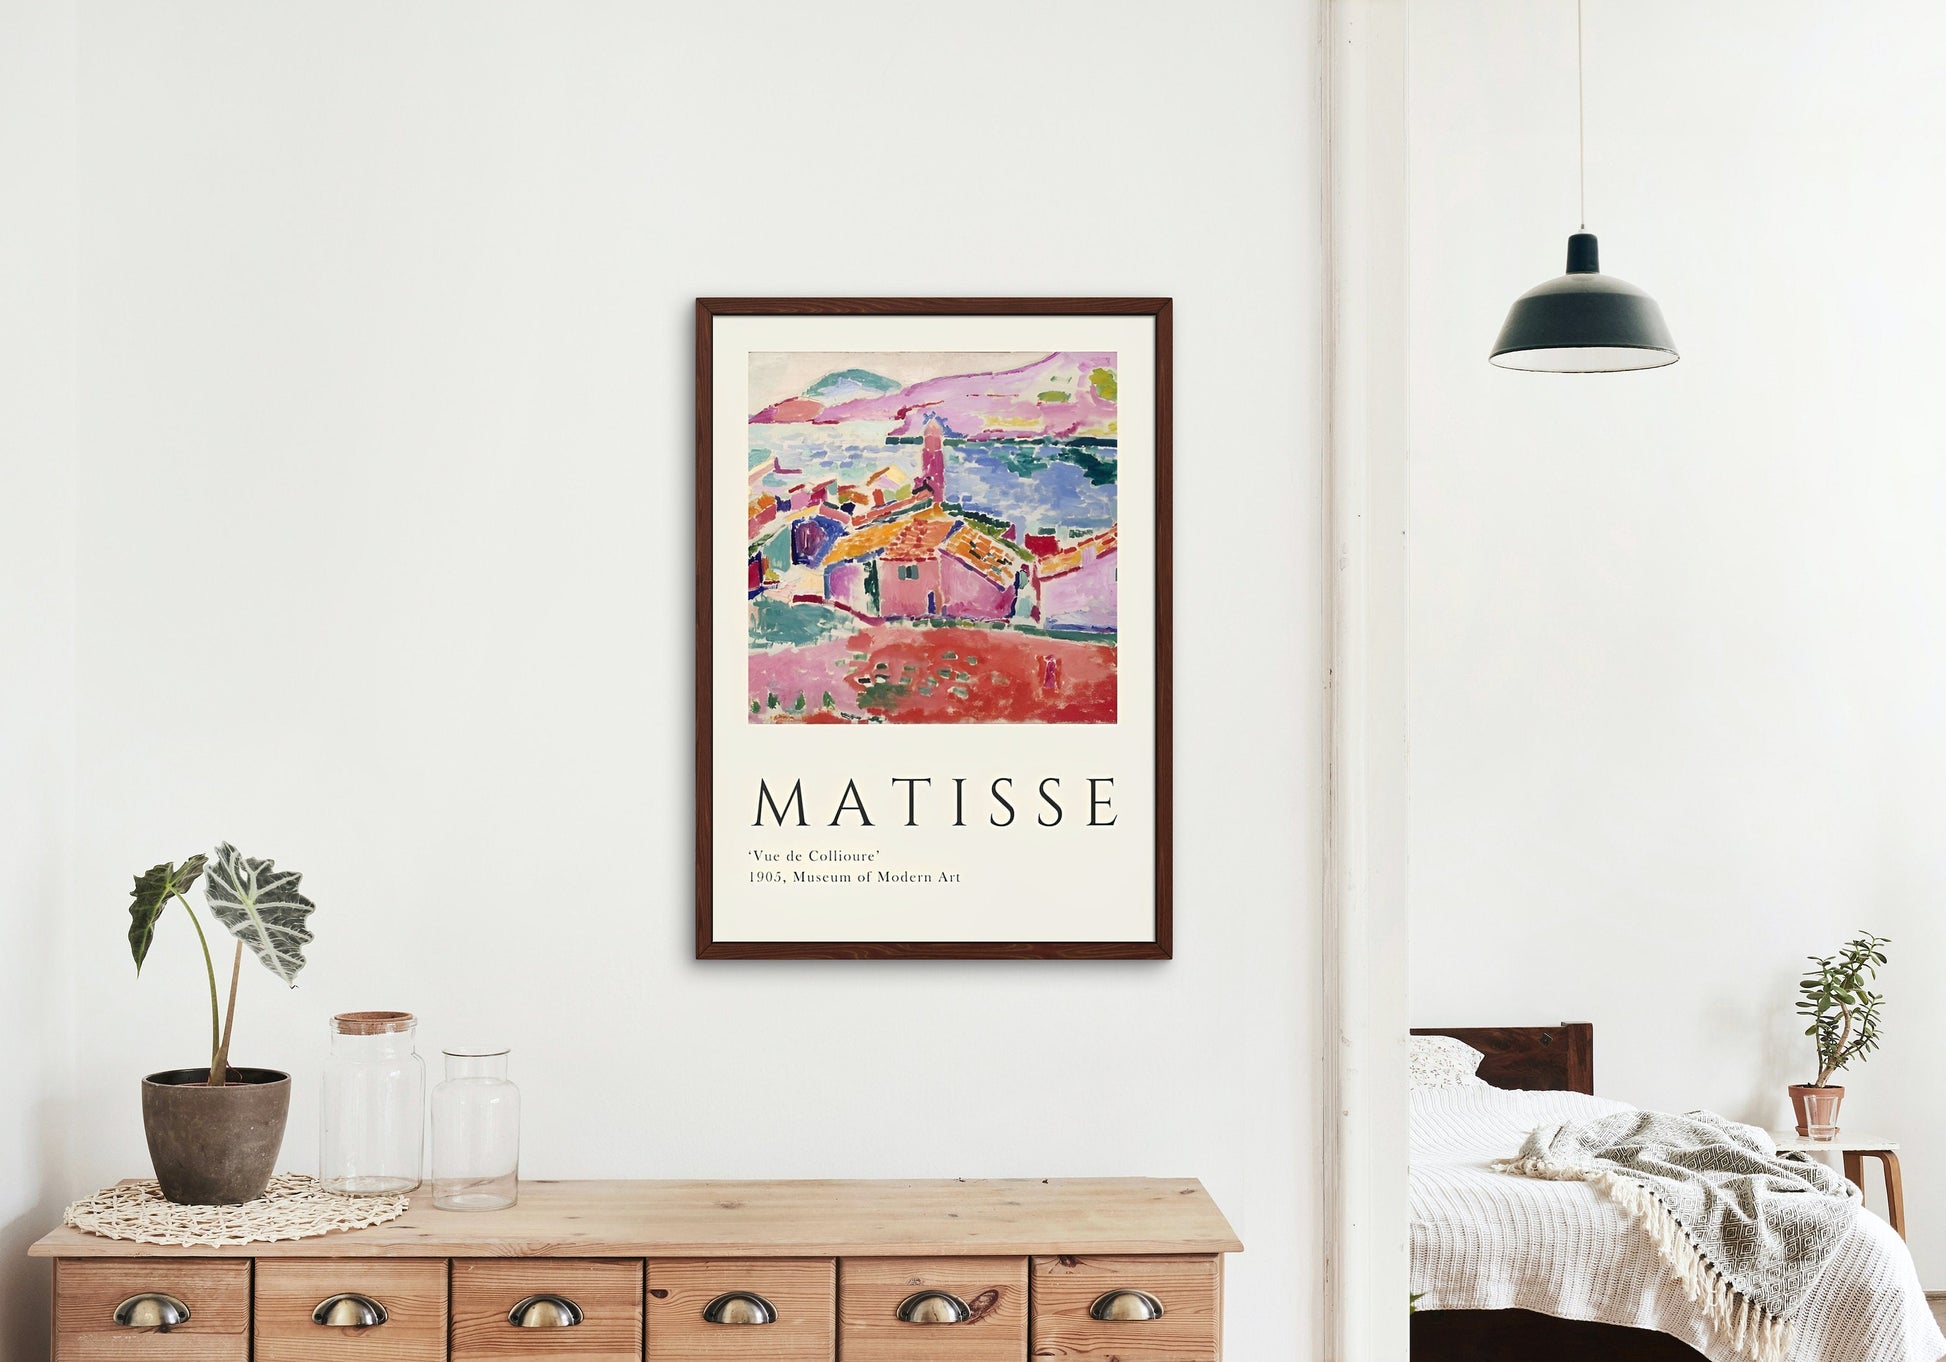 Matisse Set of 2 DIGITAL PRINTS, Museum Poster Prints, Matisse Garden, Landscape at Coulliere, Vintage botanical prints set, Exhibition Wall